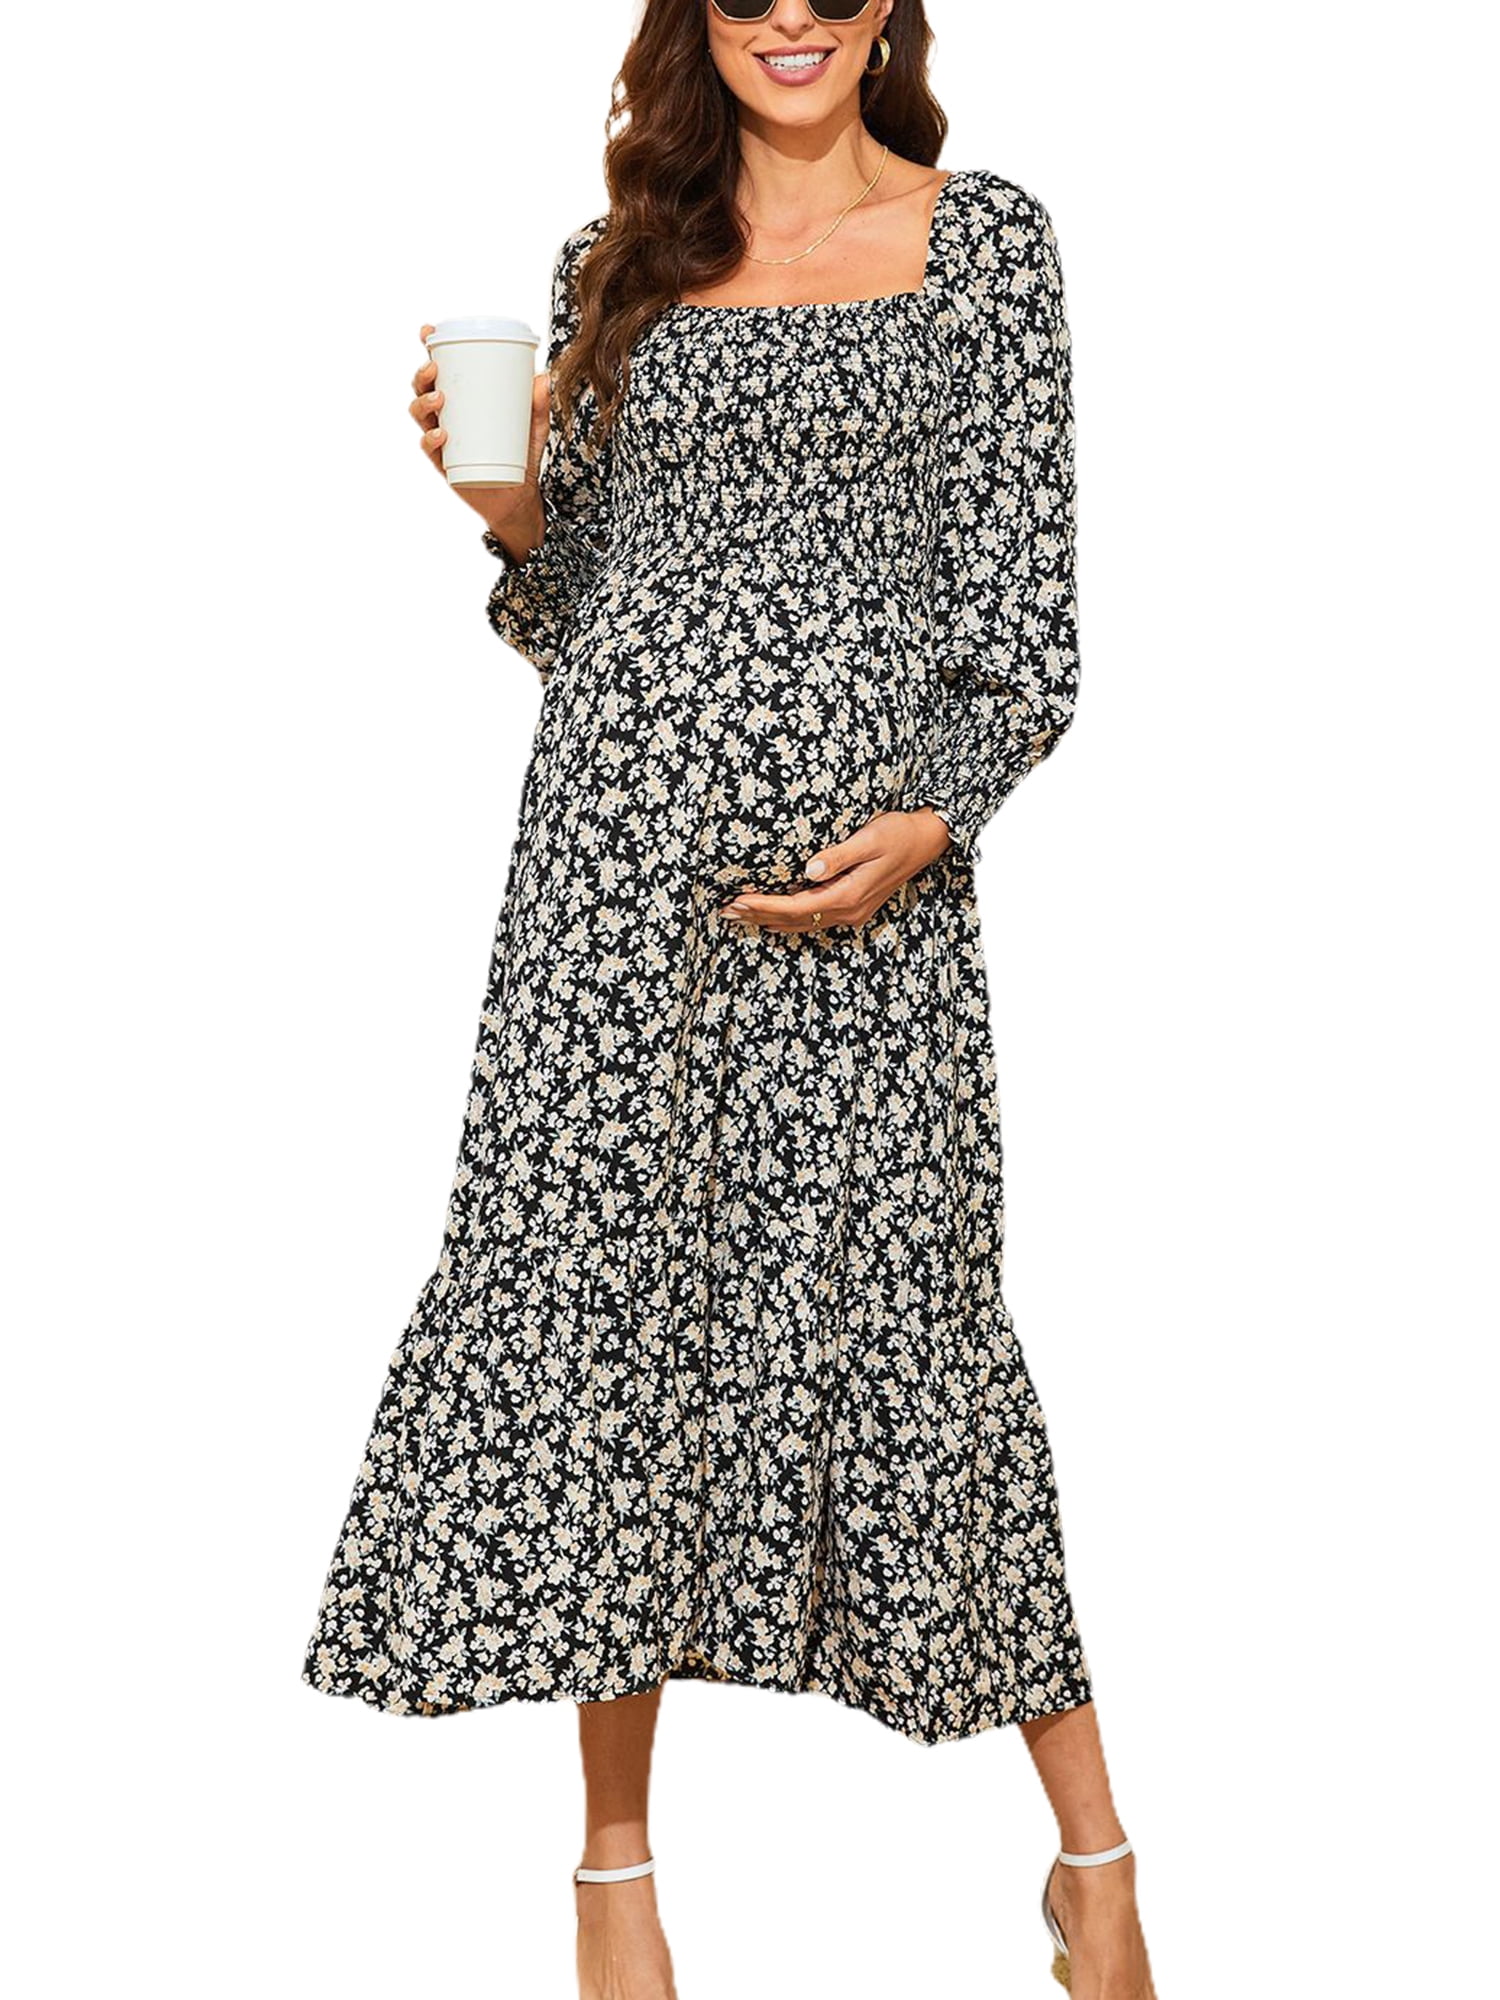 Daeful Women Swing Dress Long Sleeve Maternity Floral Print Midi ...